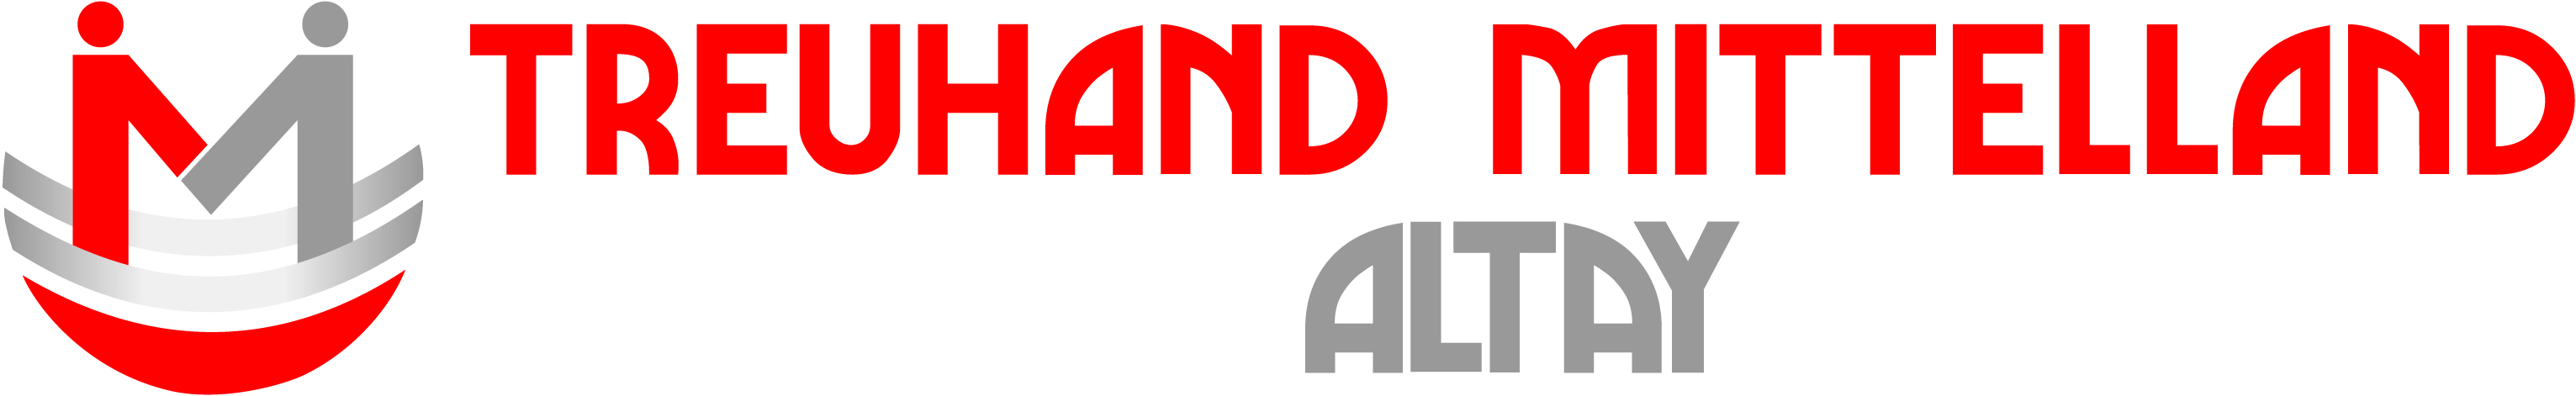 treuhandmittelland logo